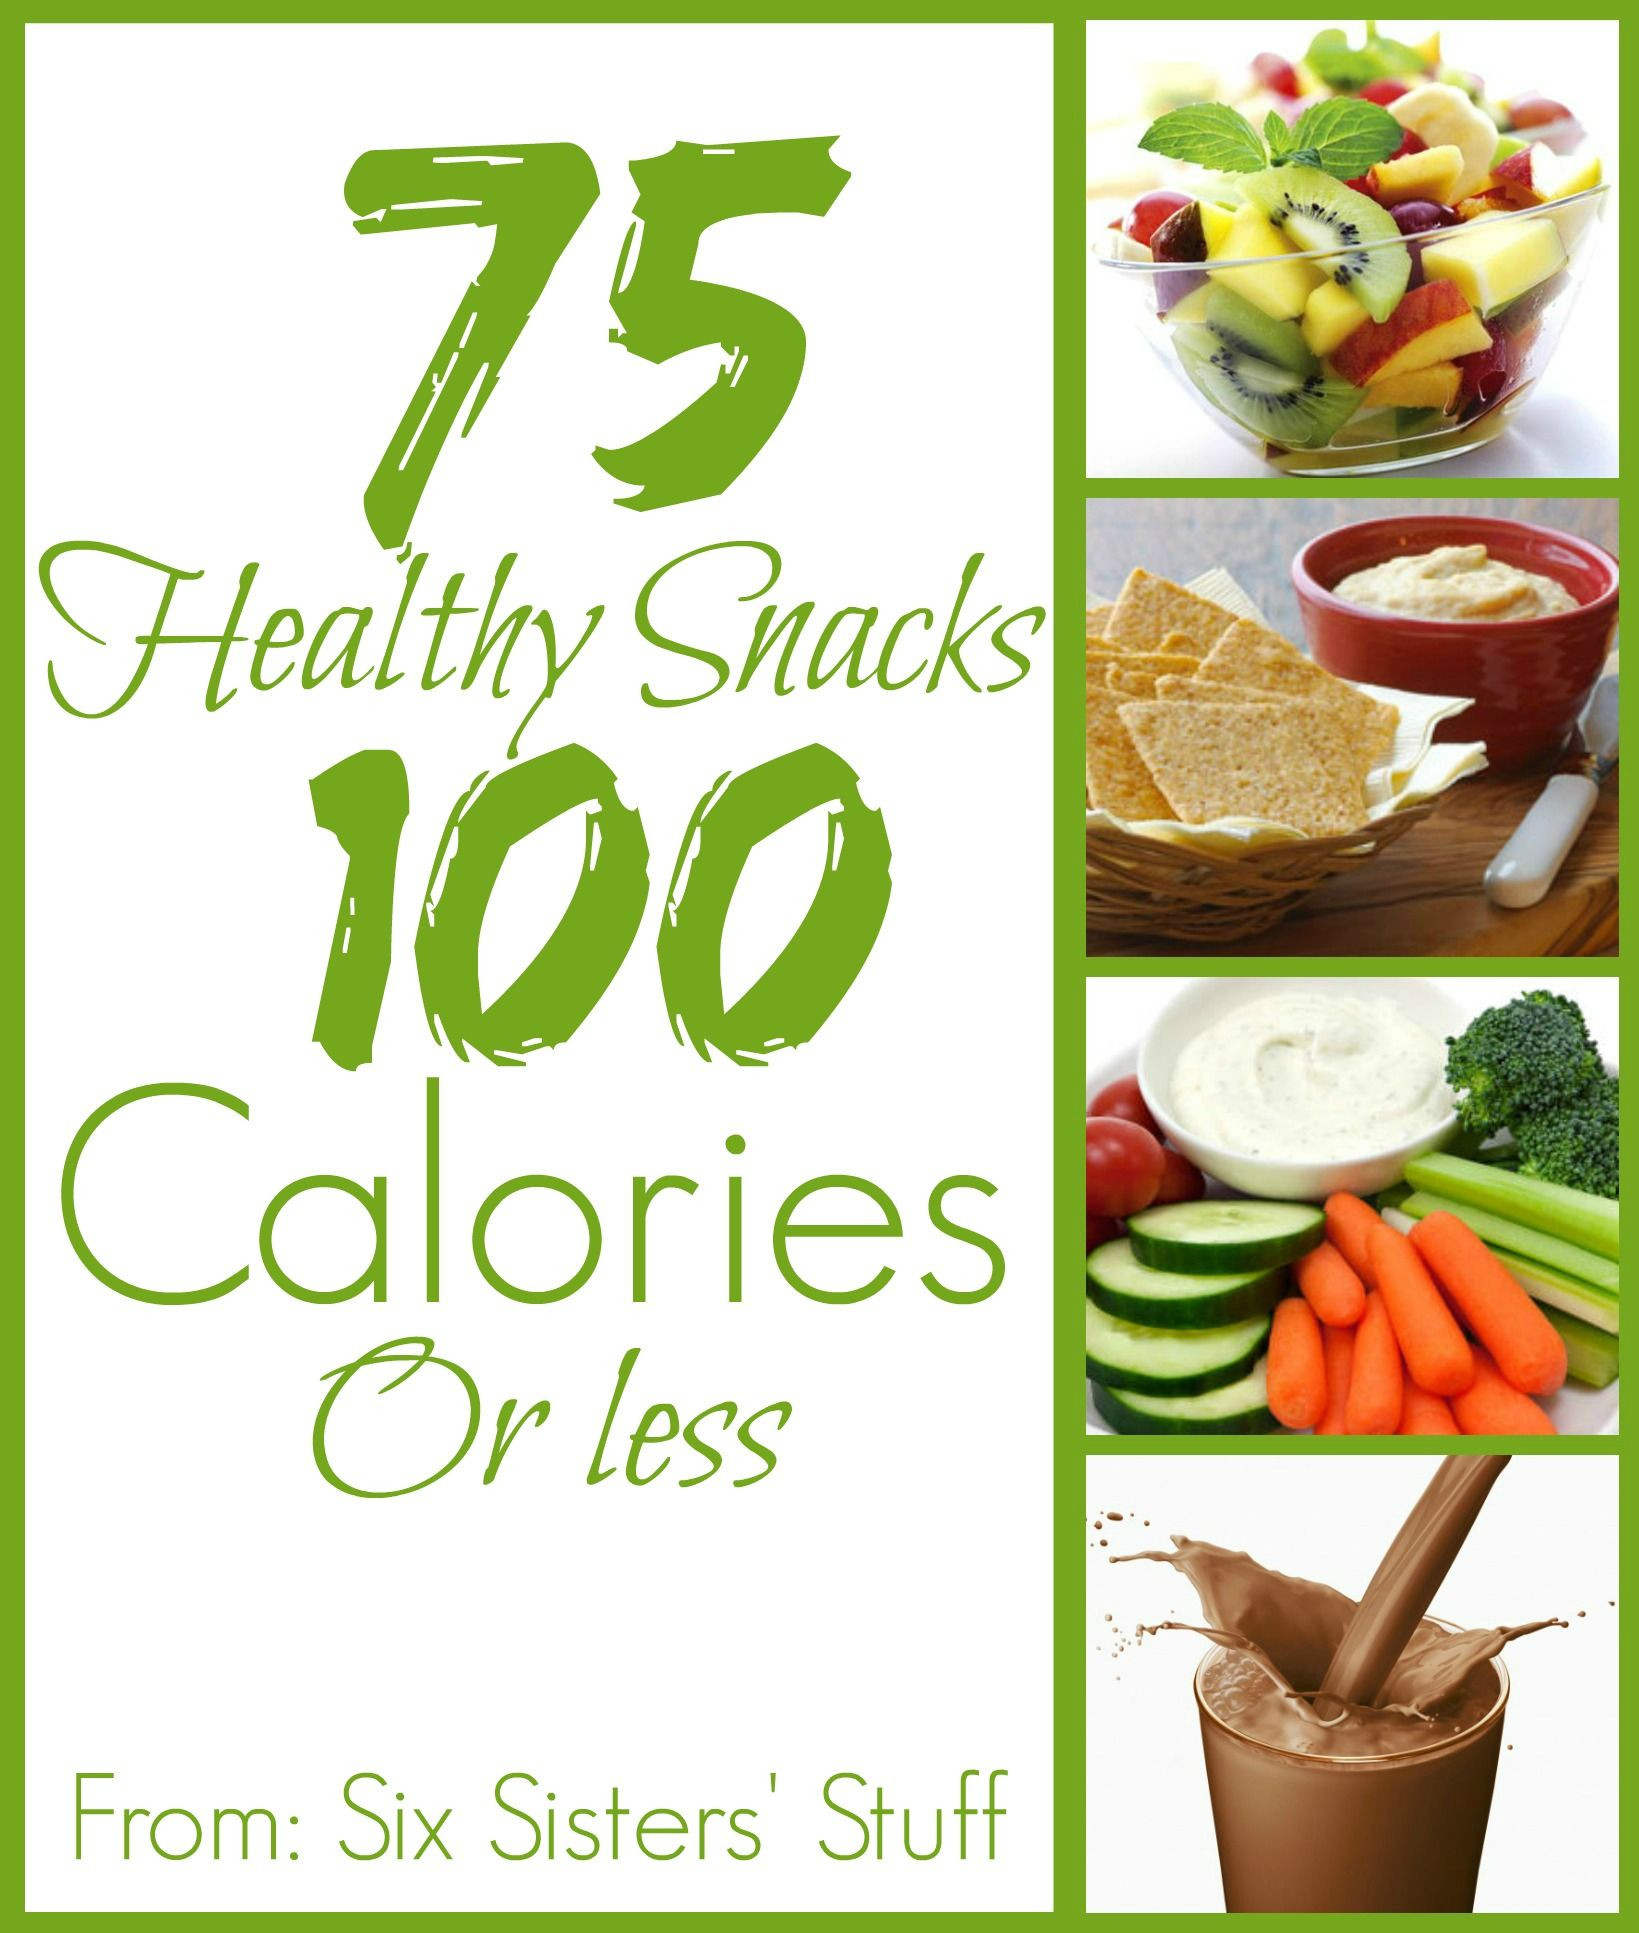 100 Calorie Snacks List
 Healthy snacks 100 cals or less good list